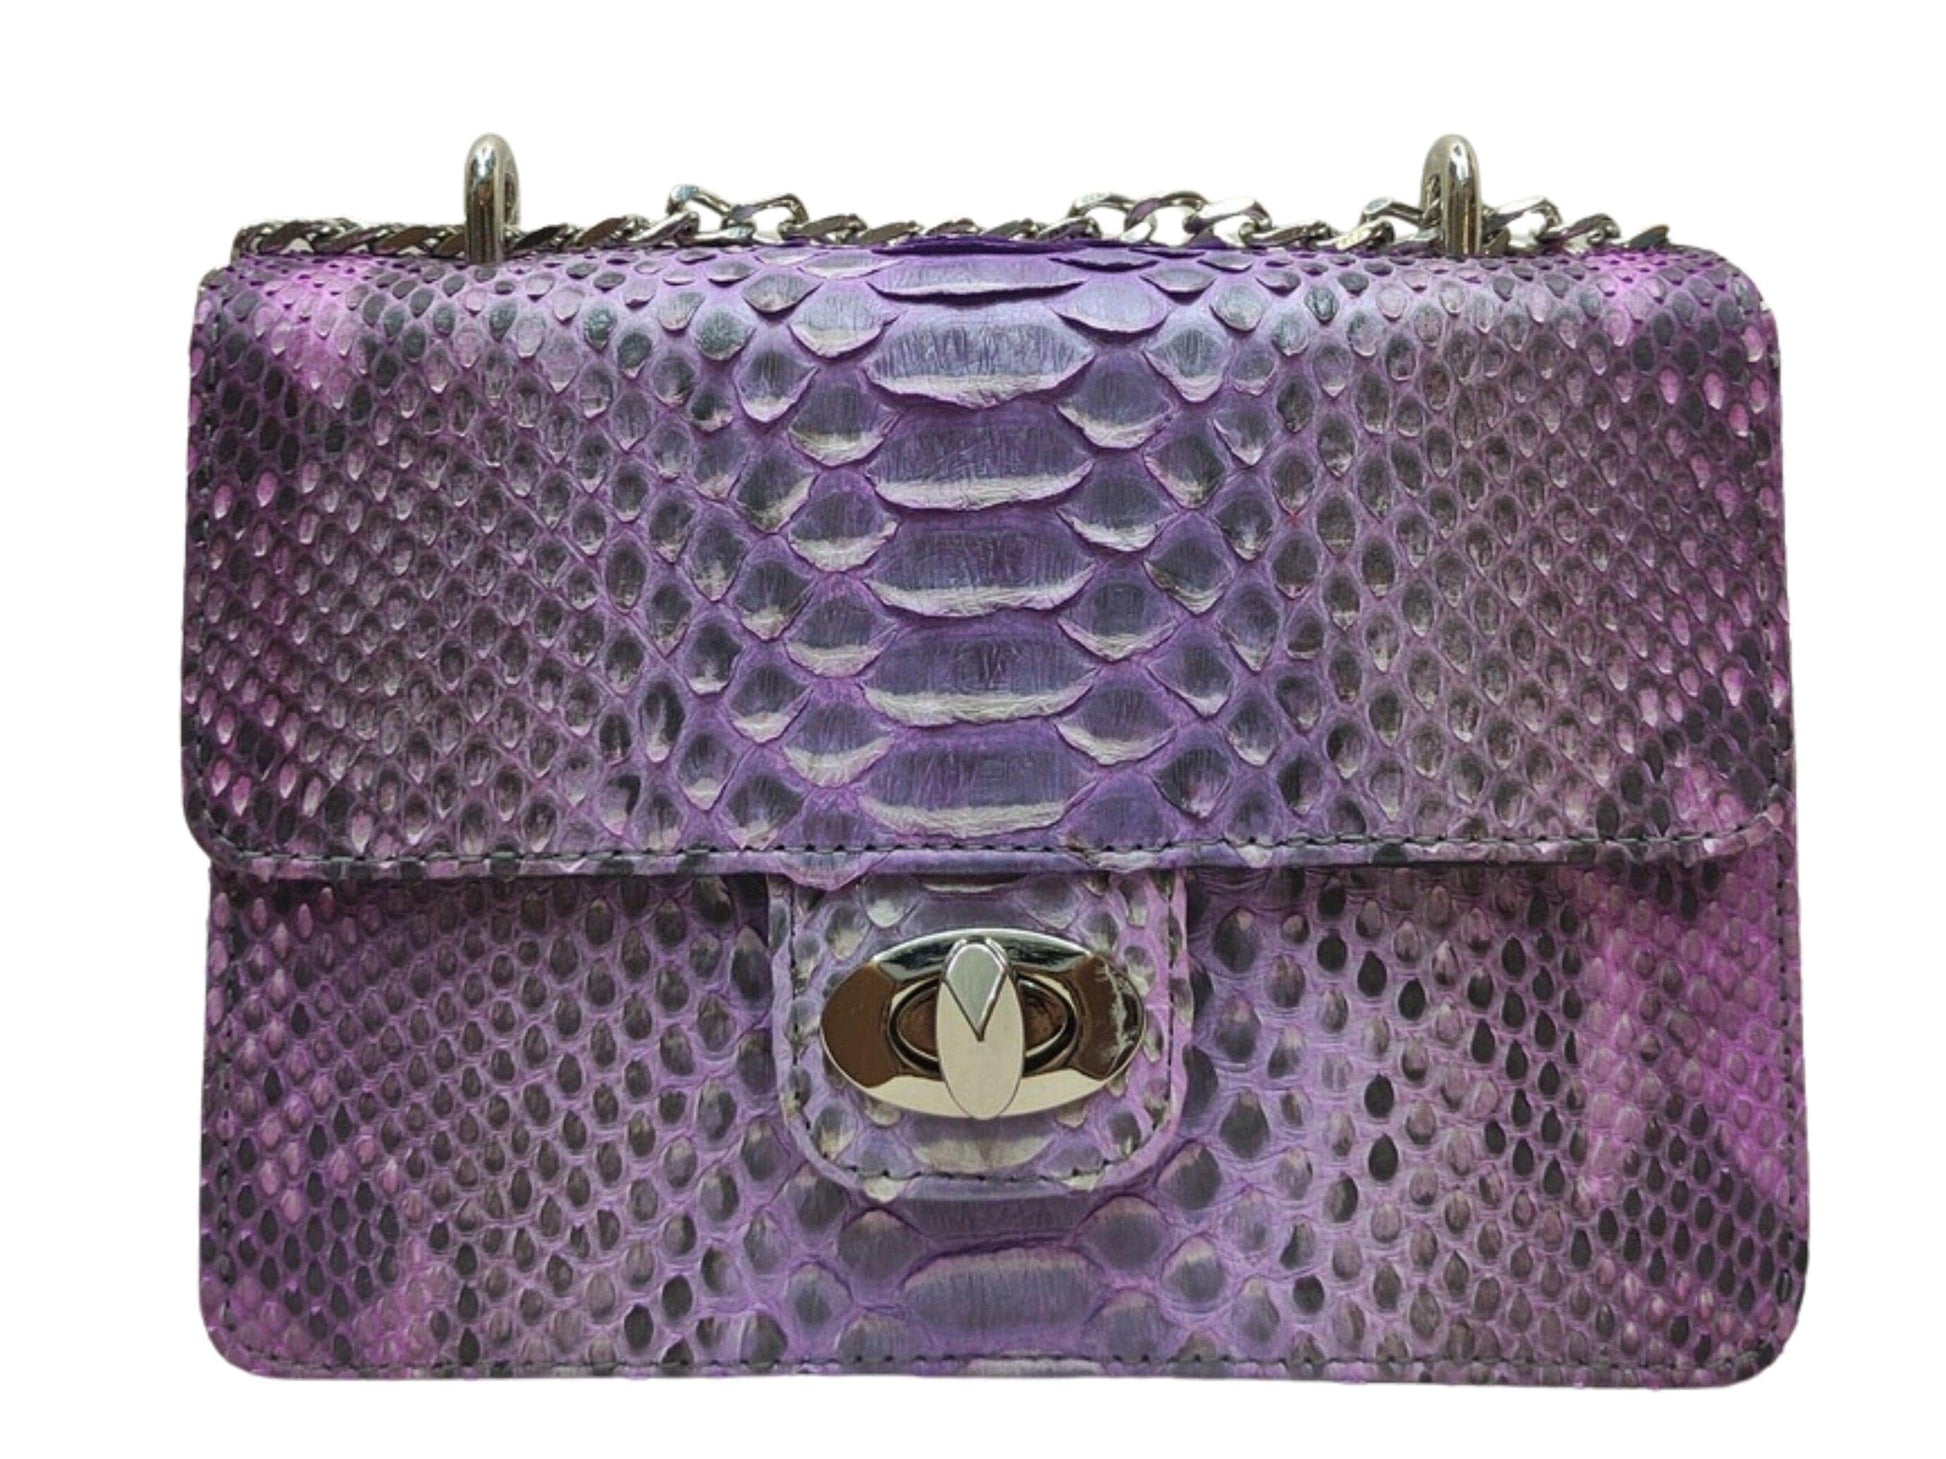 Python Bags Snakeskin Evening Handbag for Women Purple Python Jacket by LFM Fashion